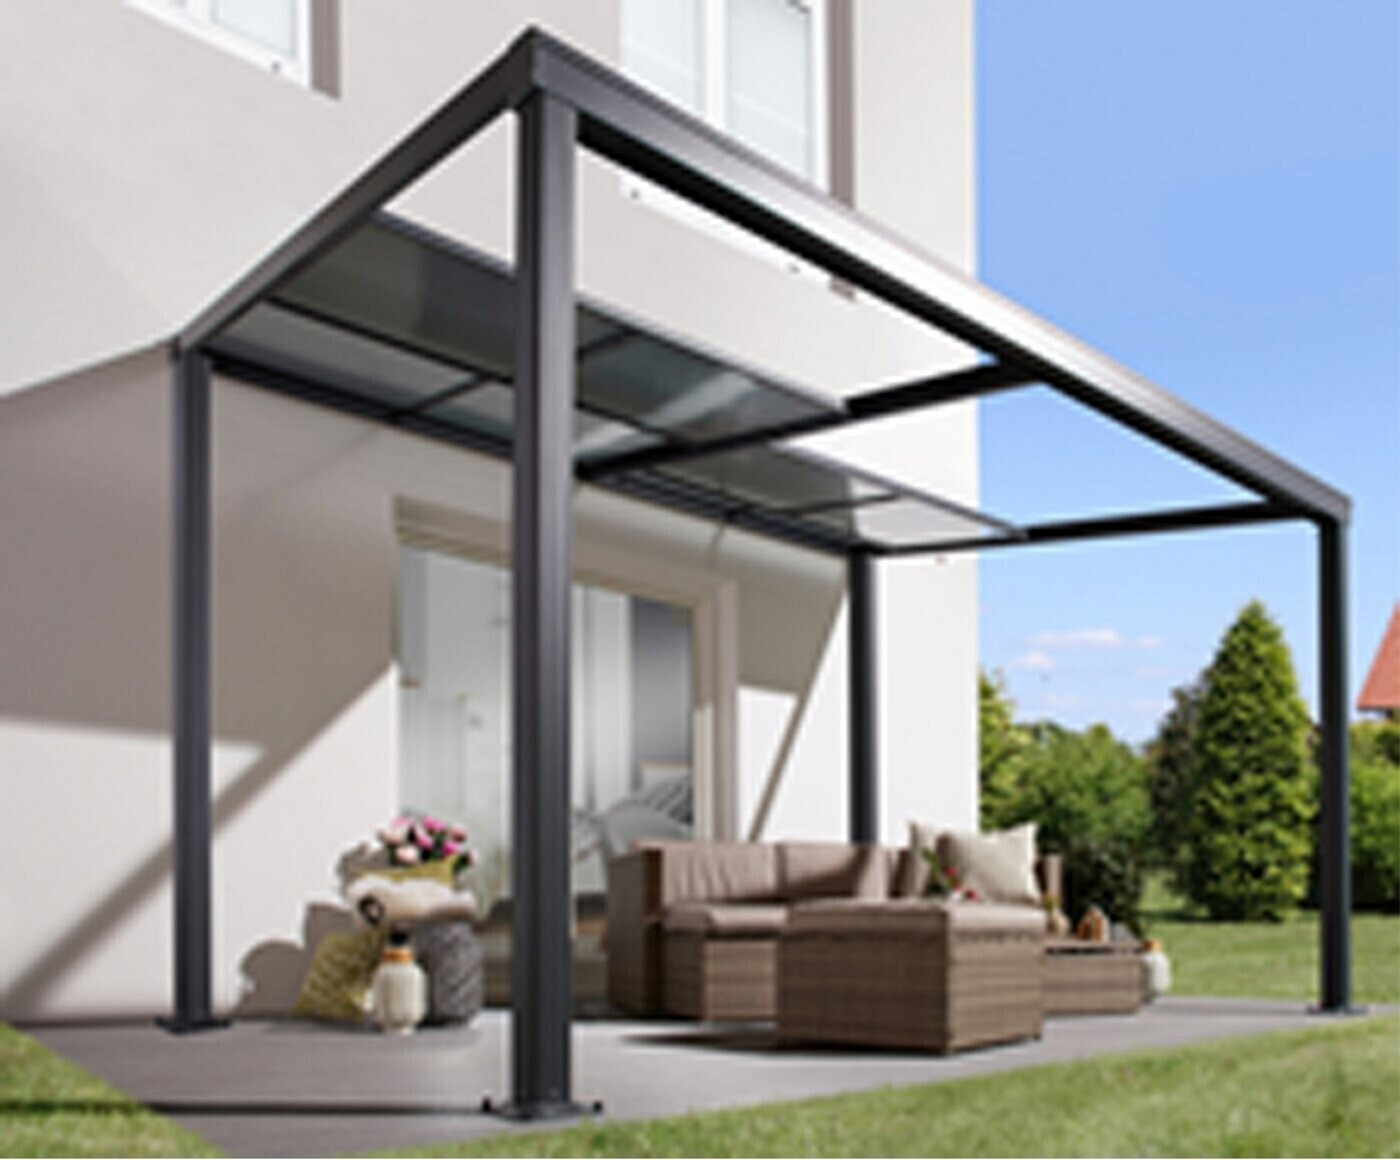  Hochwertige ALU Terrassenüberdachung/Veranda - 420 x 300 (BxT) /  Überdachung Sierra Weiß